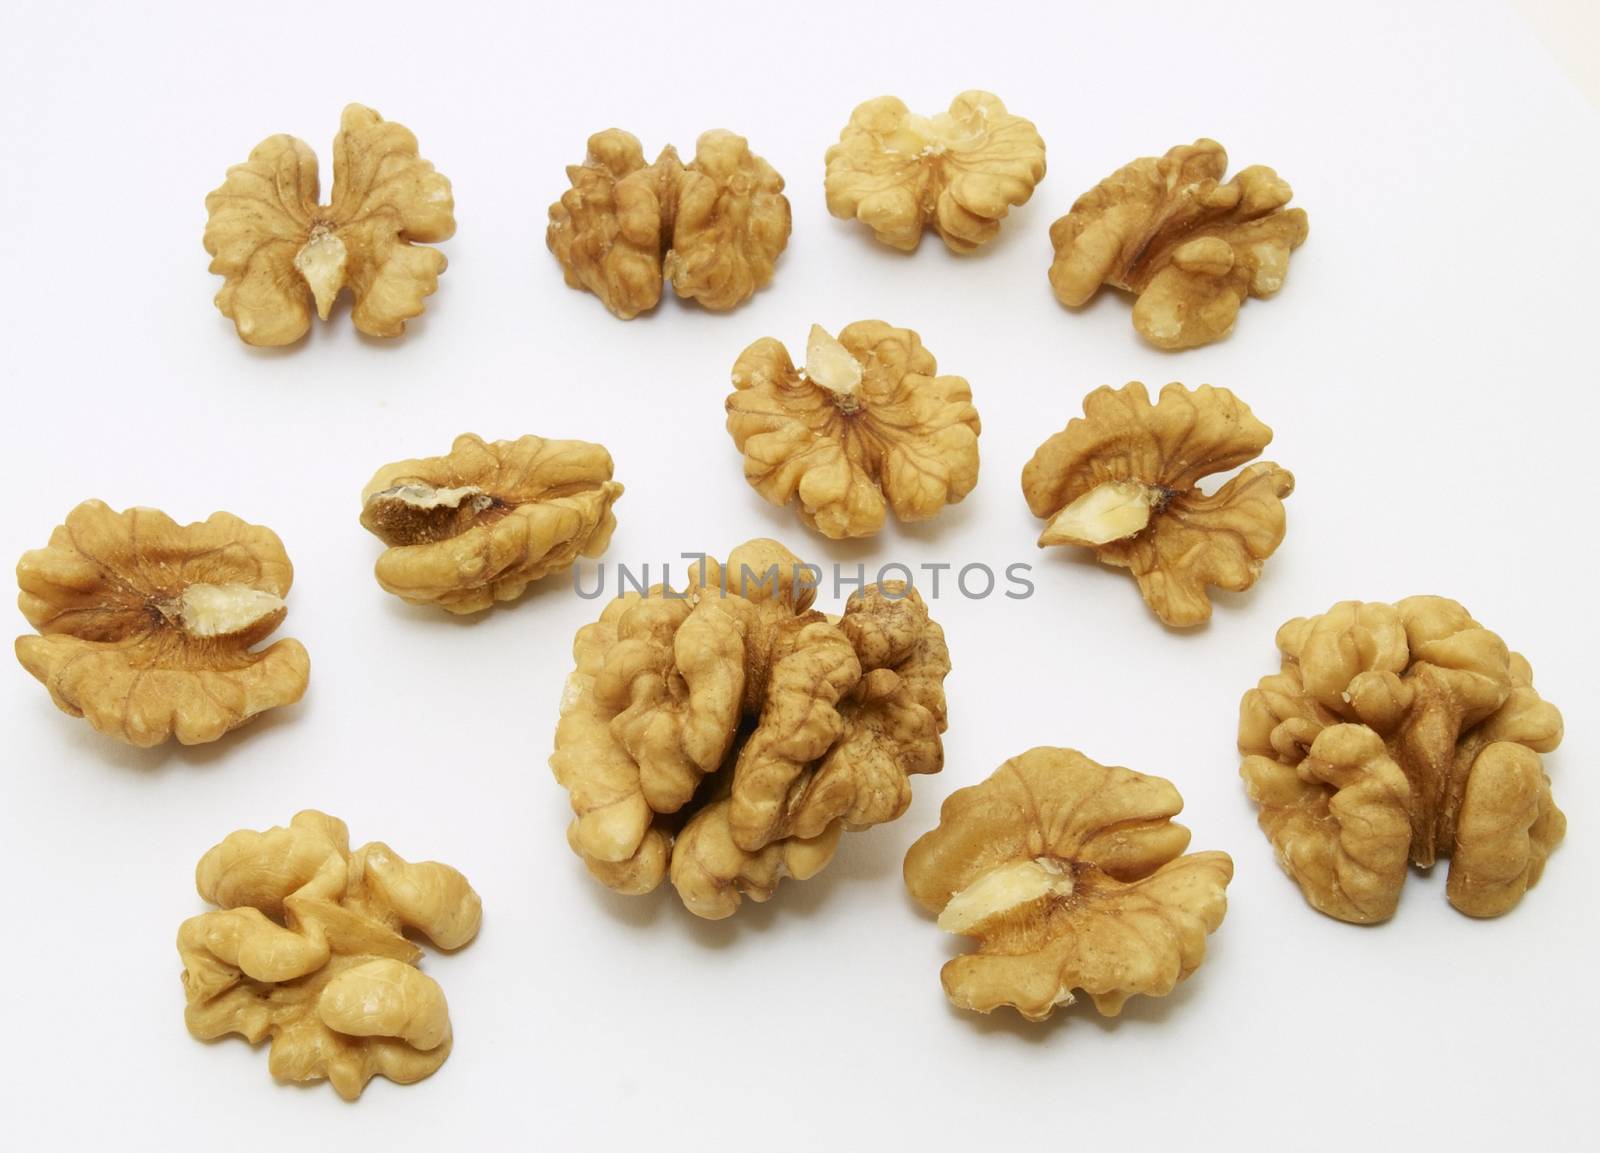 Kernels of walnuts on white background.